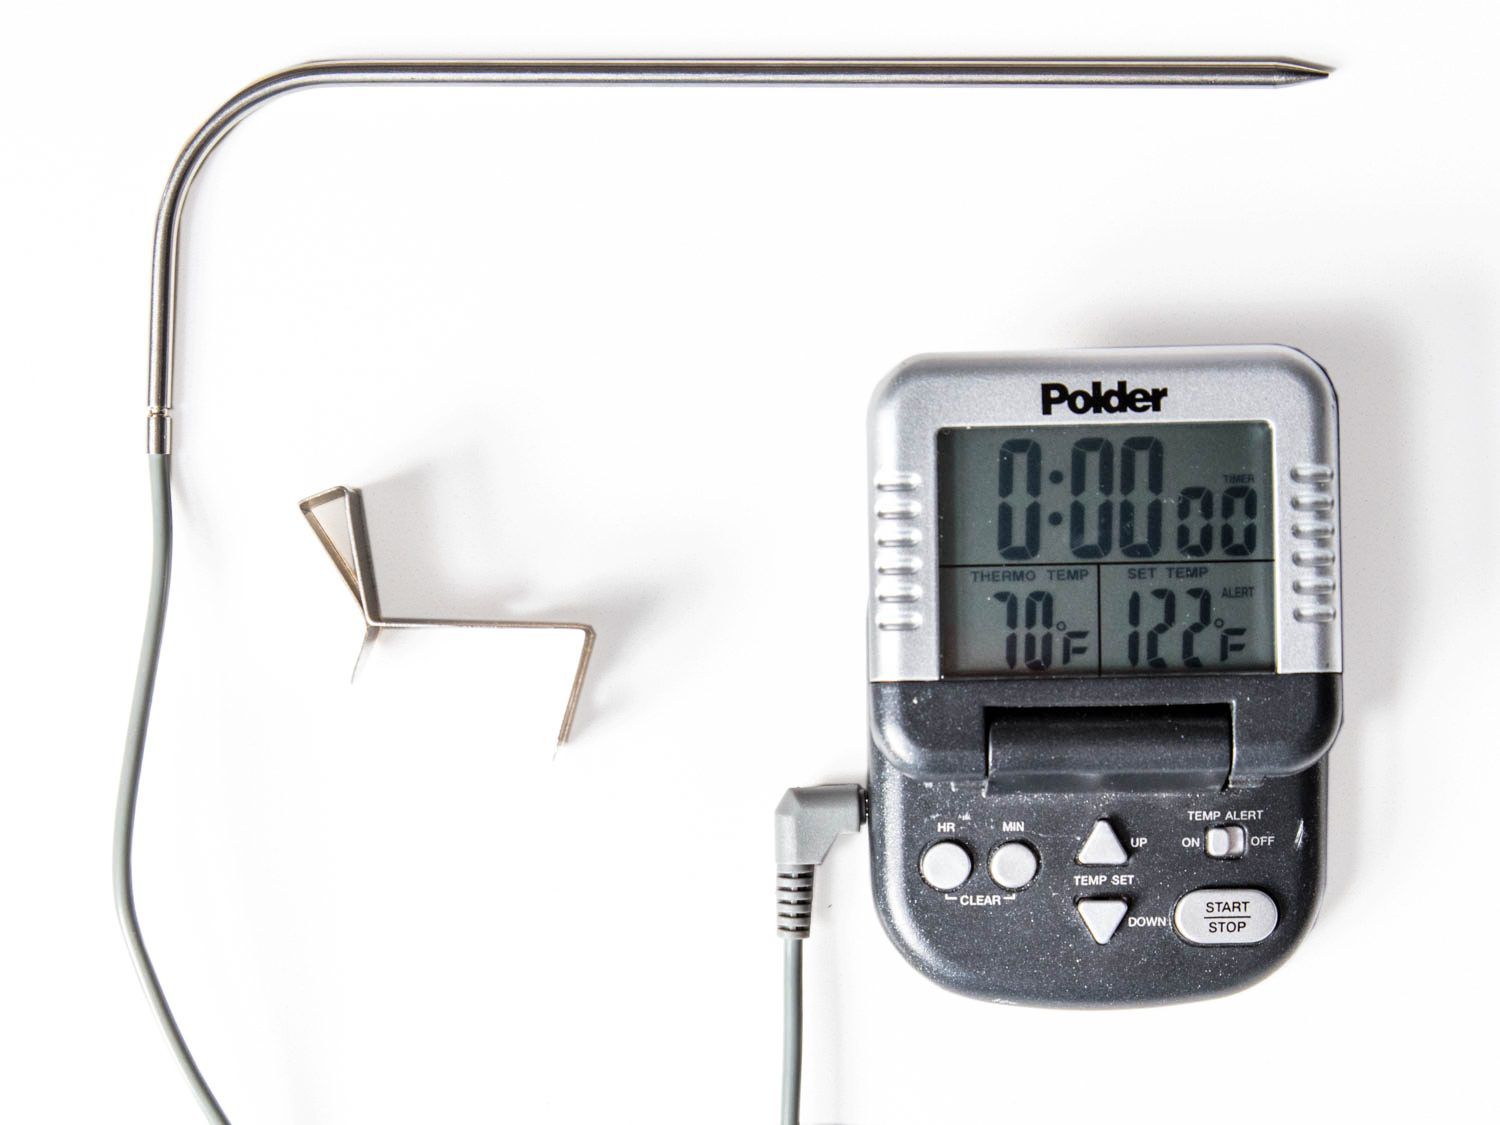 Polder digital probe thermometer